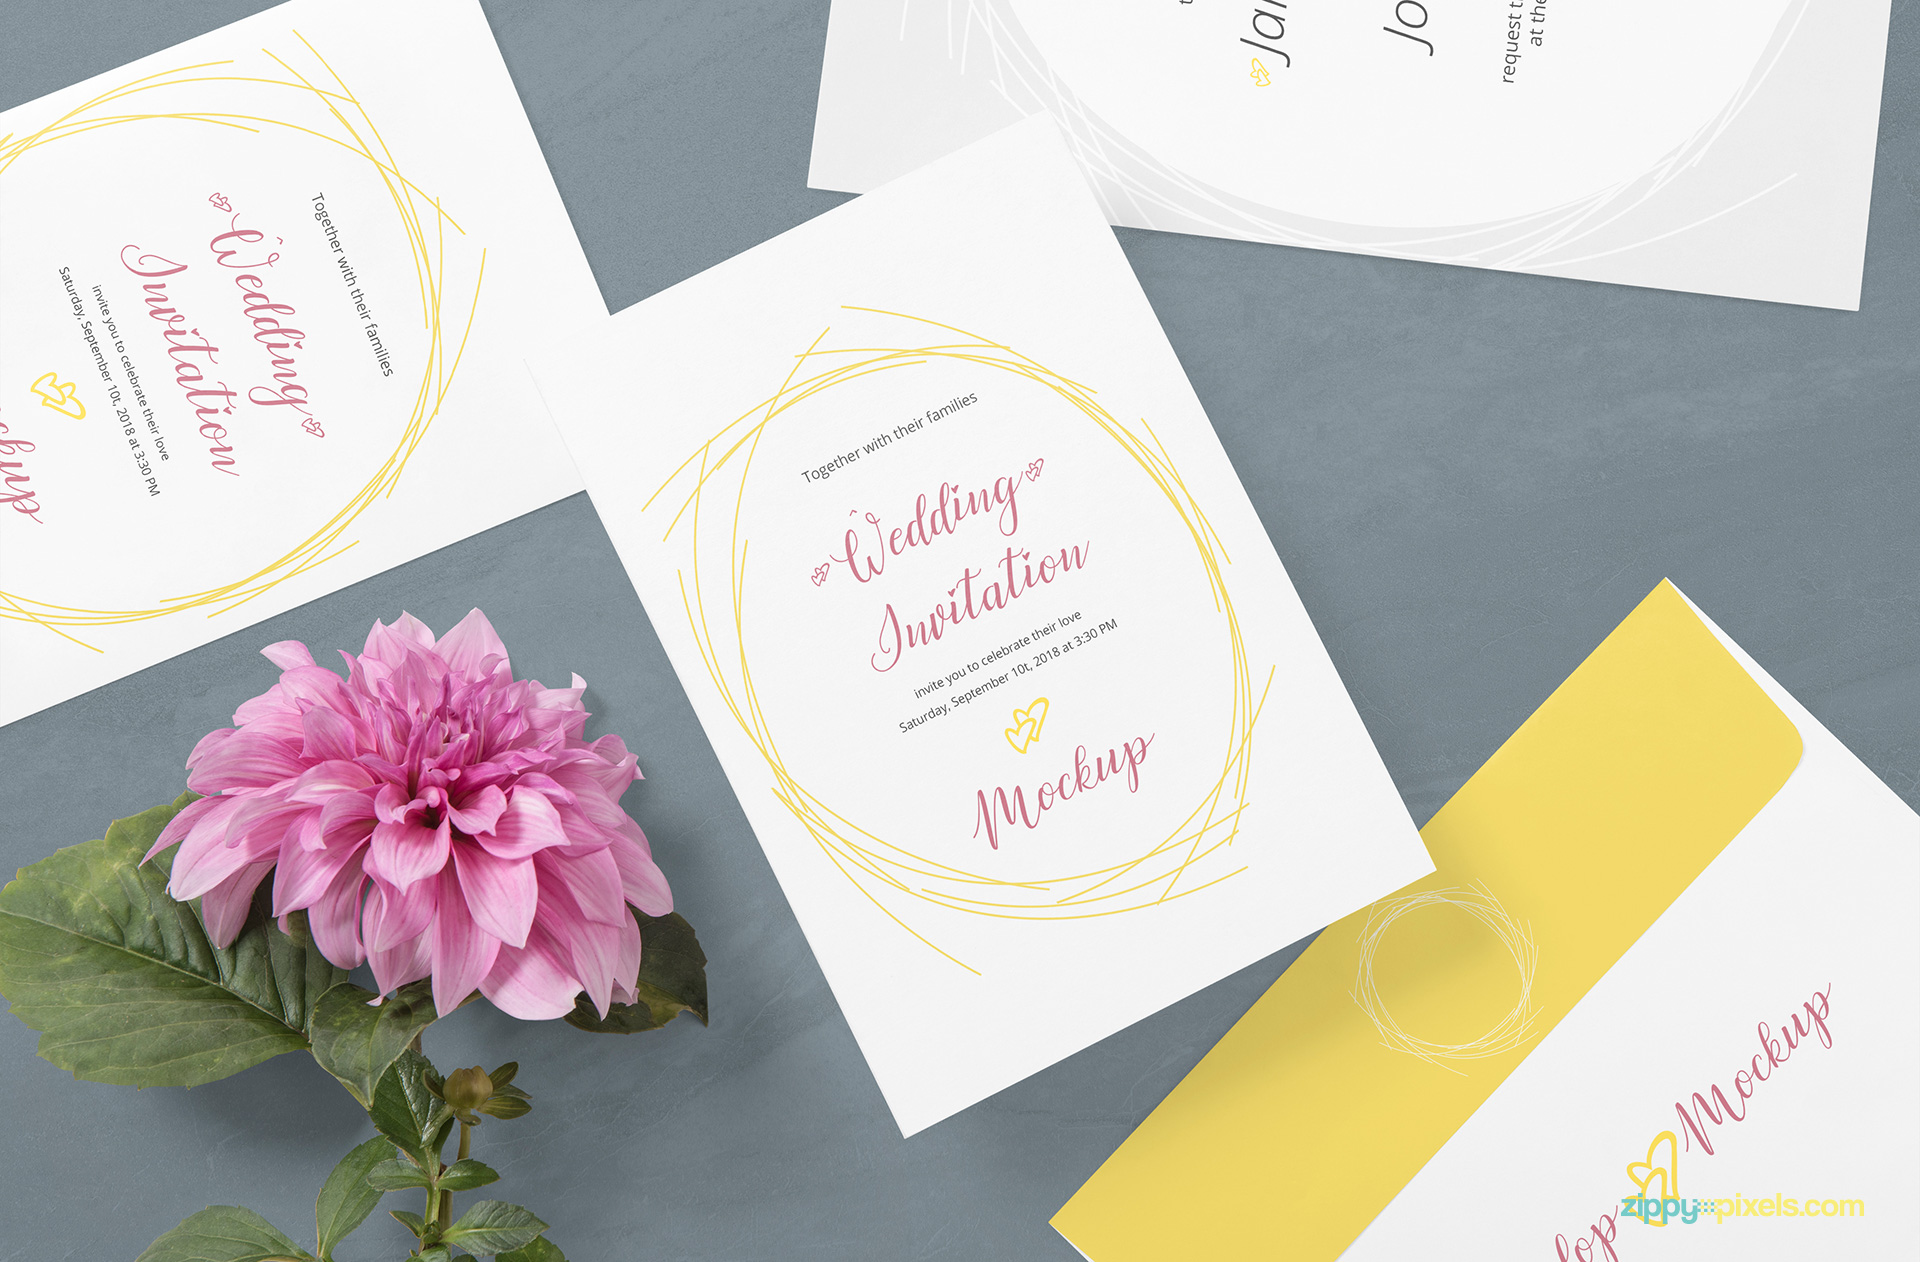 Download Free Wedding Card Mockup PSD | ZippyPixels PSD Mockup Templates